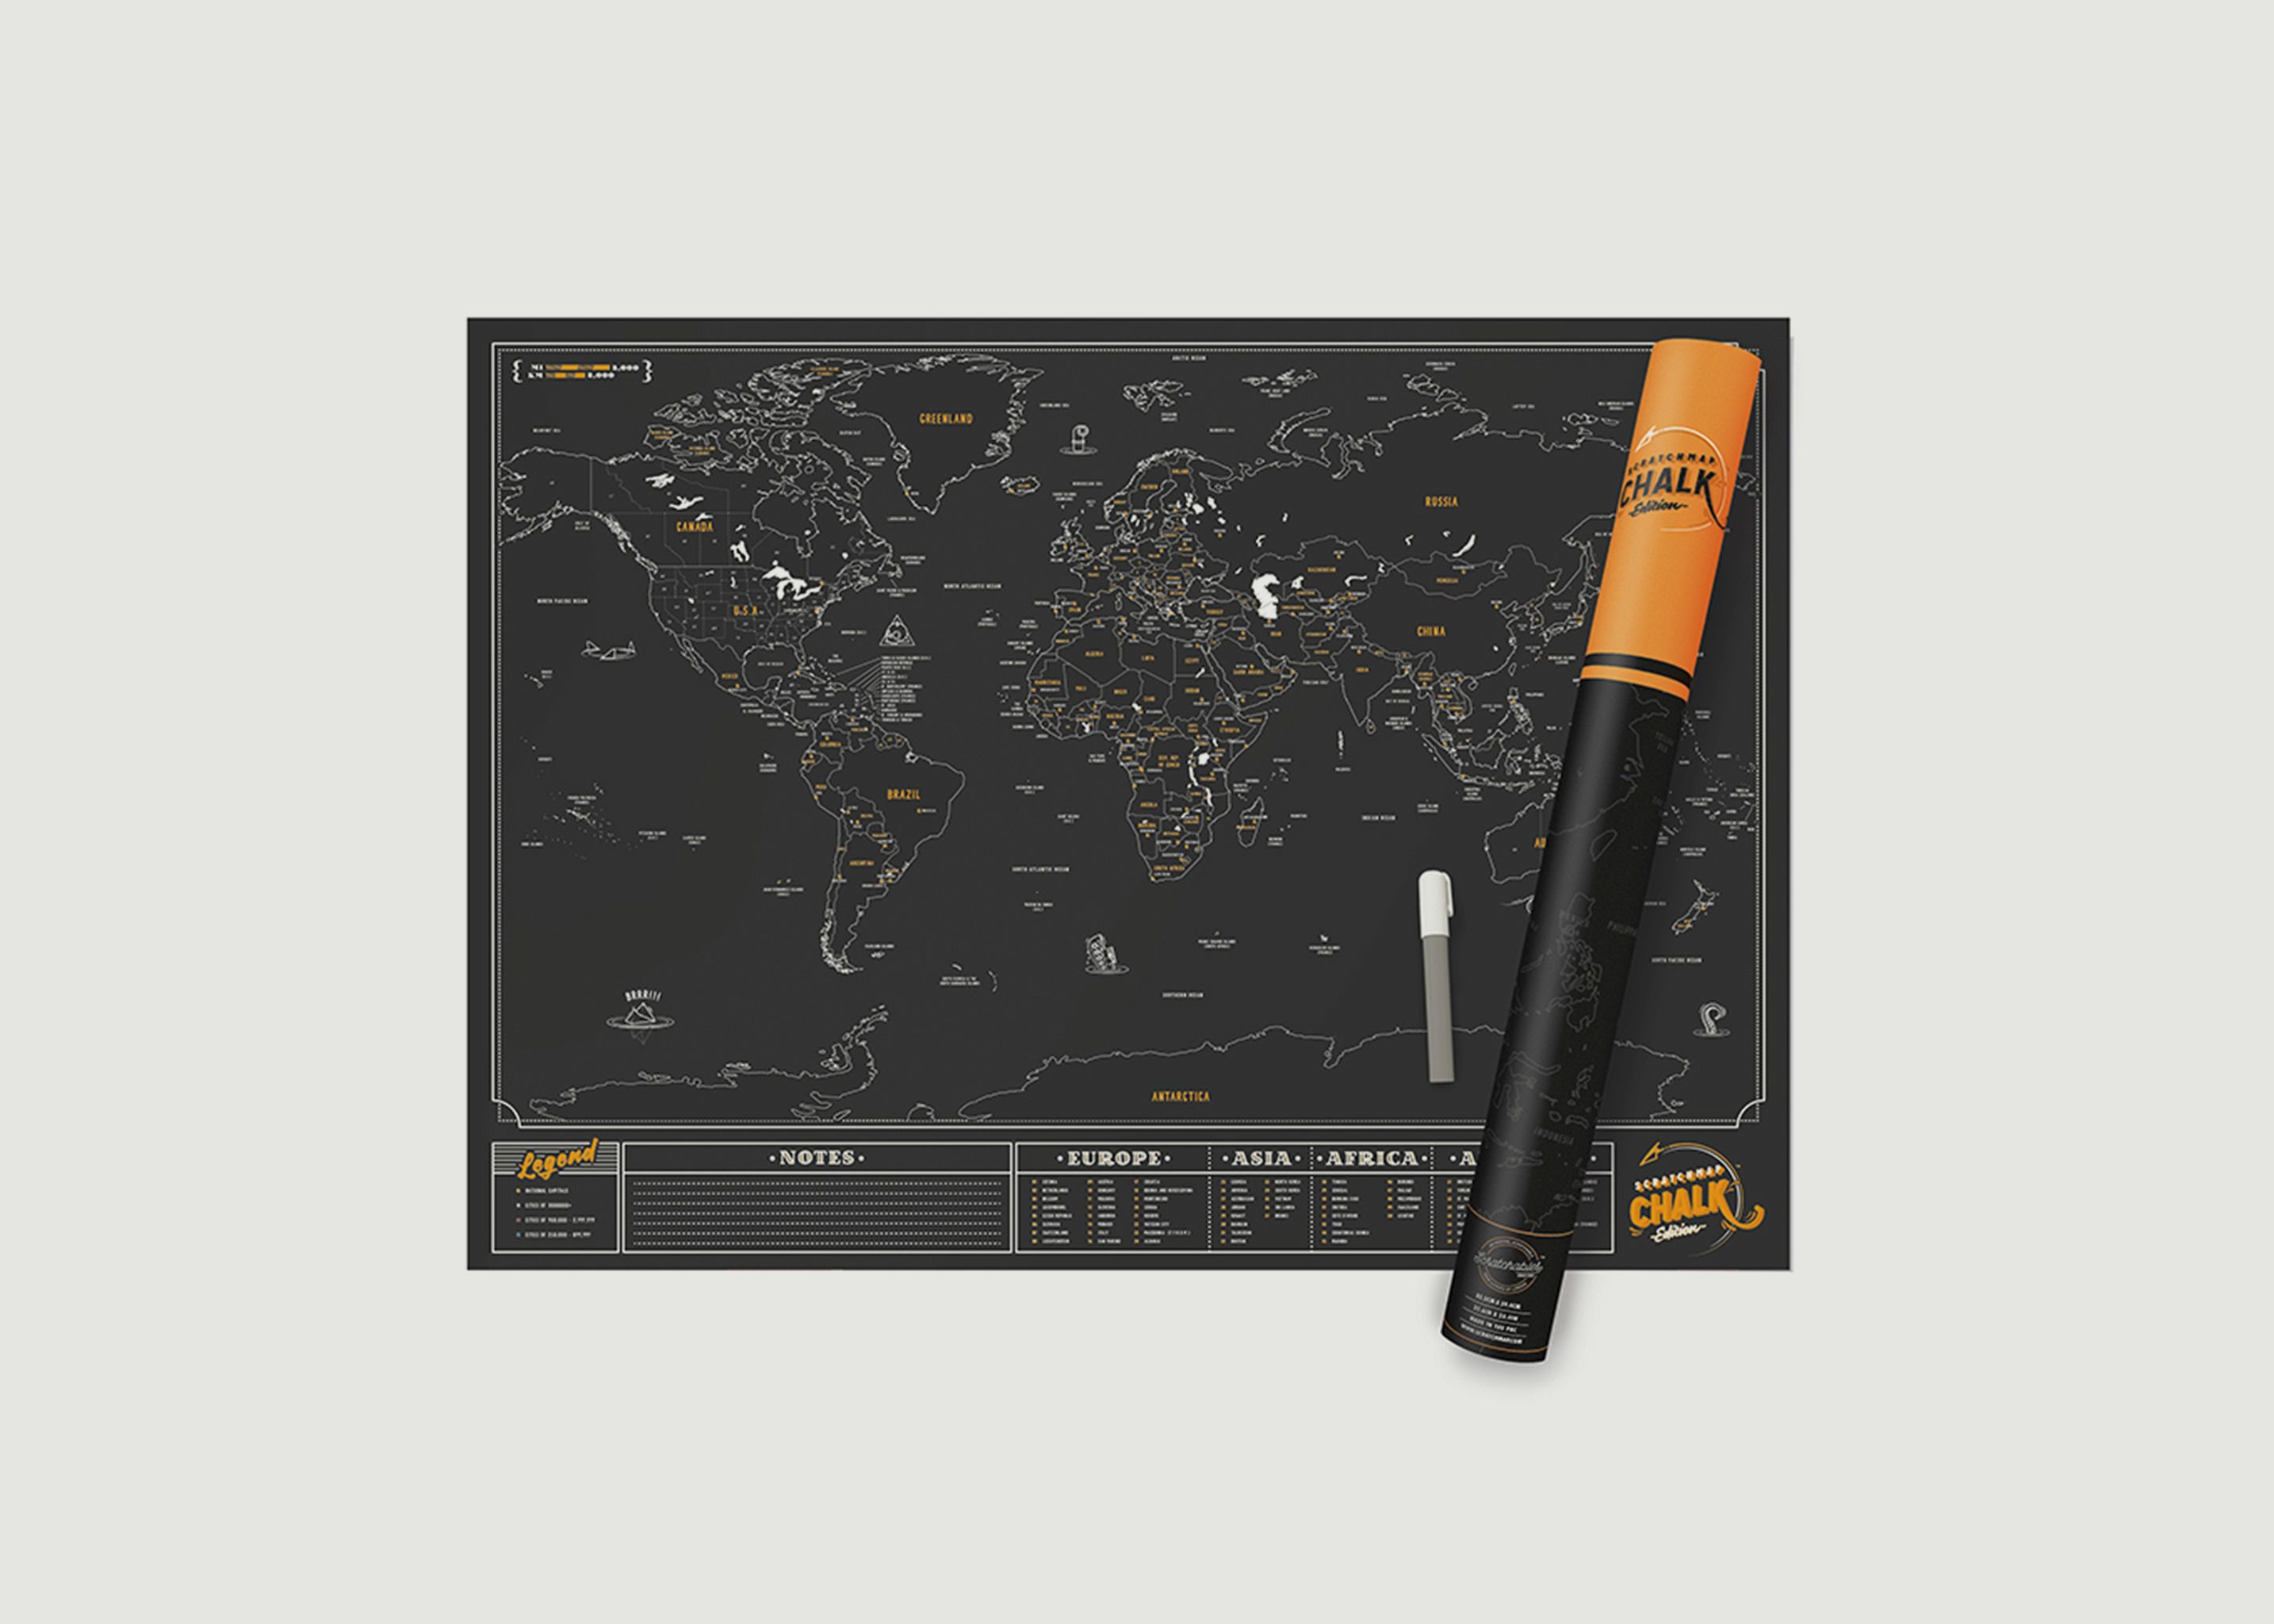 Scratch Off World Map Chalk Edition - Luckies